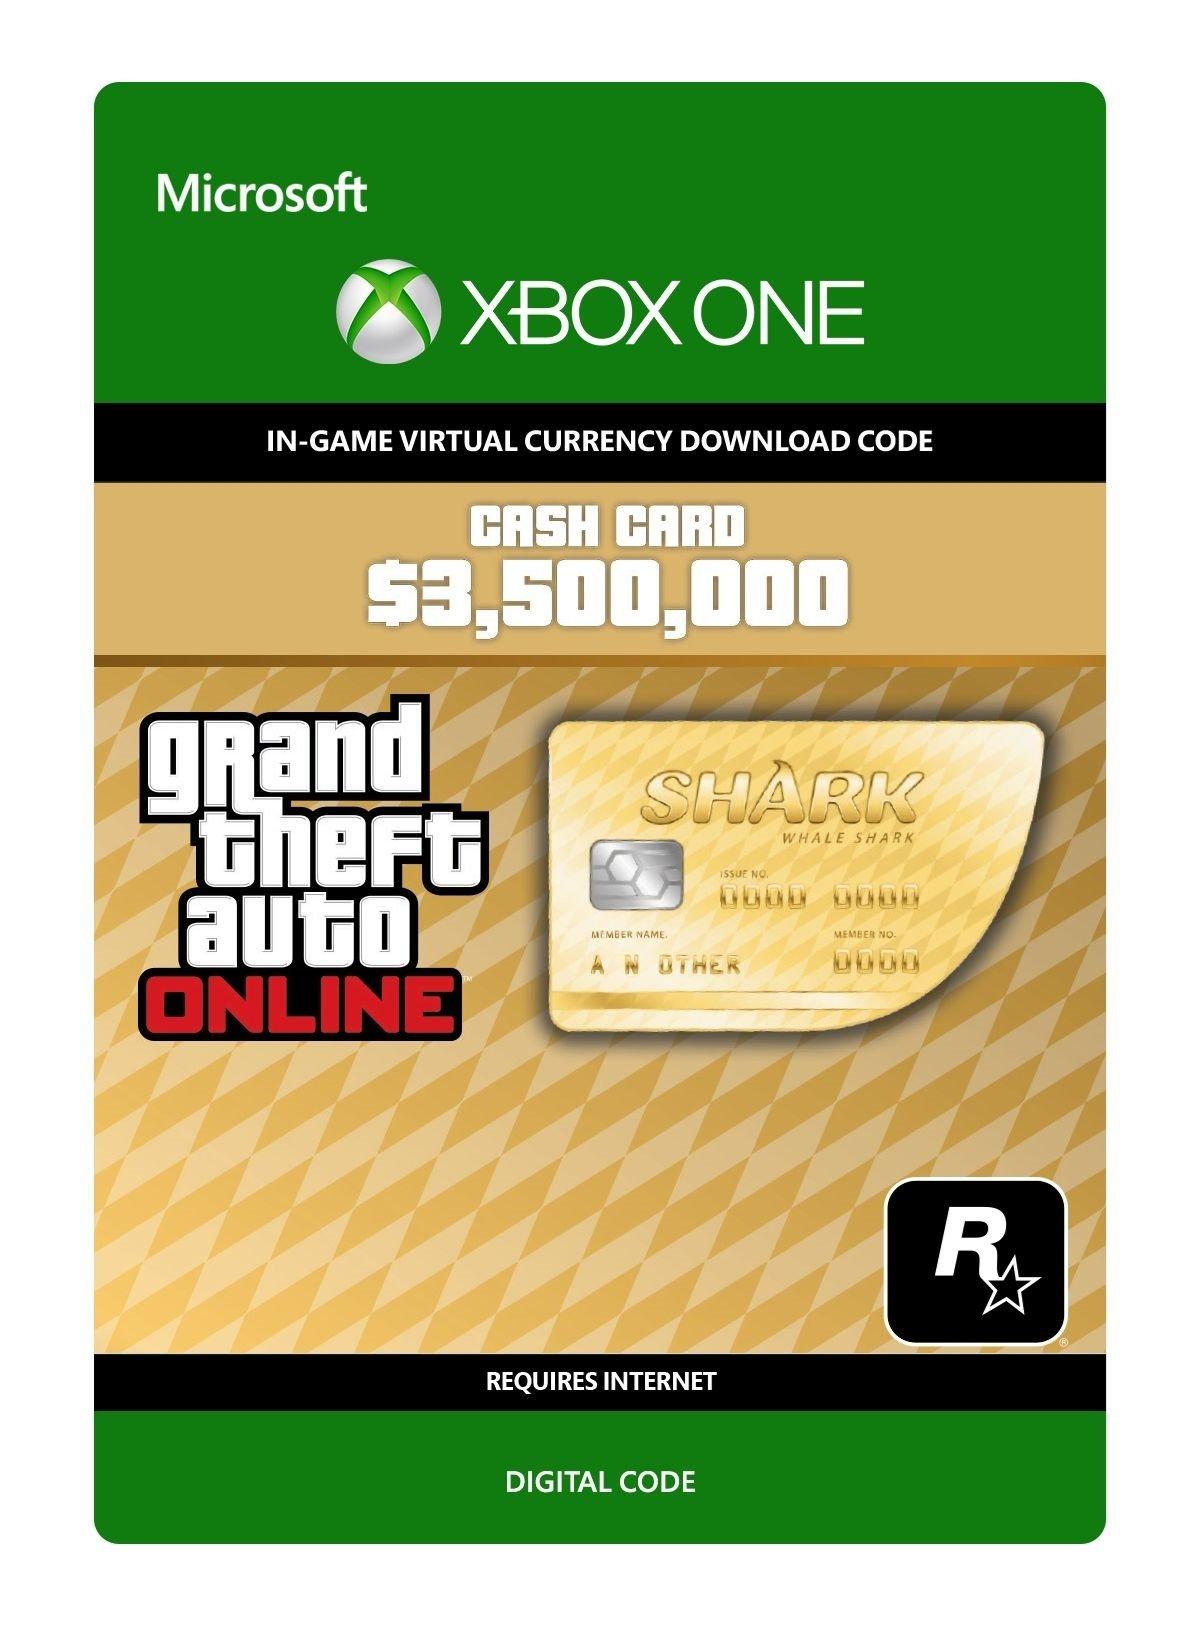 GTA V: Whale Shark Cash Card 3.500.000 In-Game GTA Dollars Xbox One (Digitale Code) - Niet besch | 7F6-00004 (d579c7a4-ac66-4b0e-a337-f23248ab6e2c)